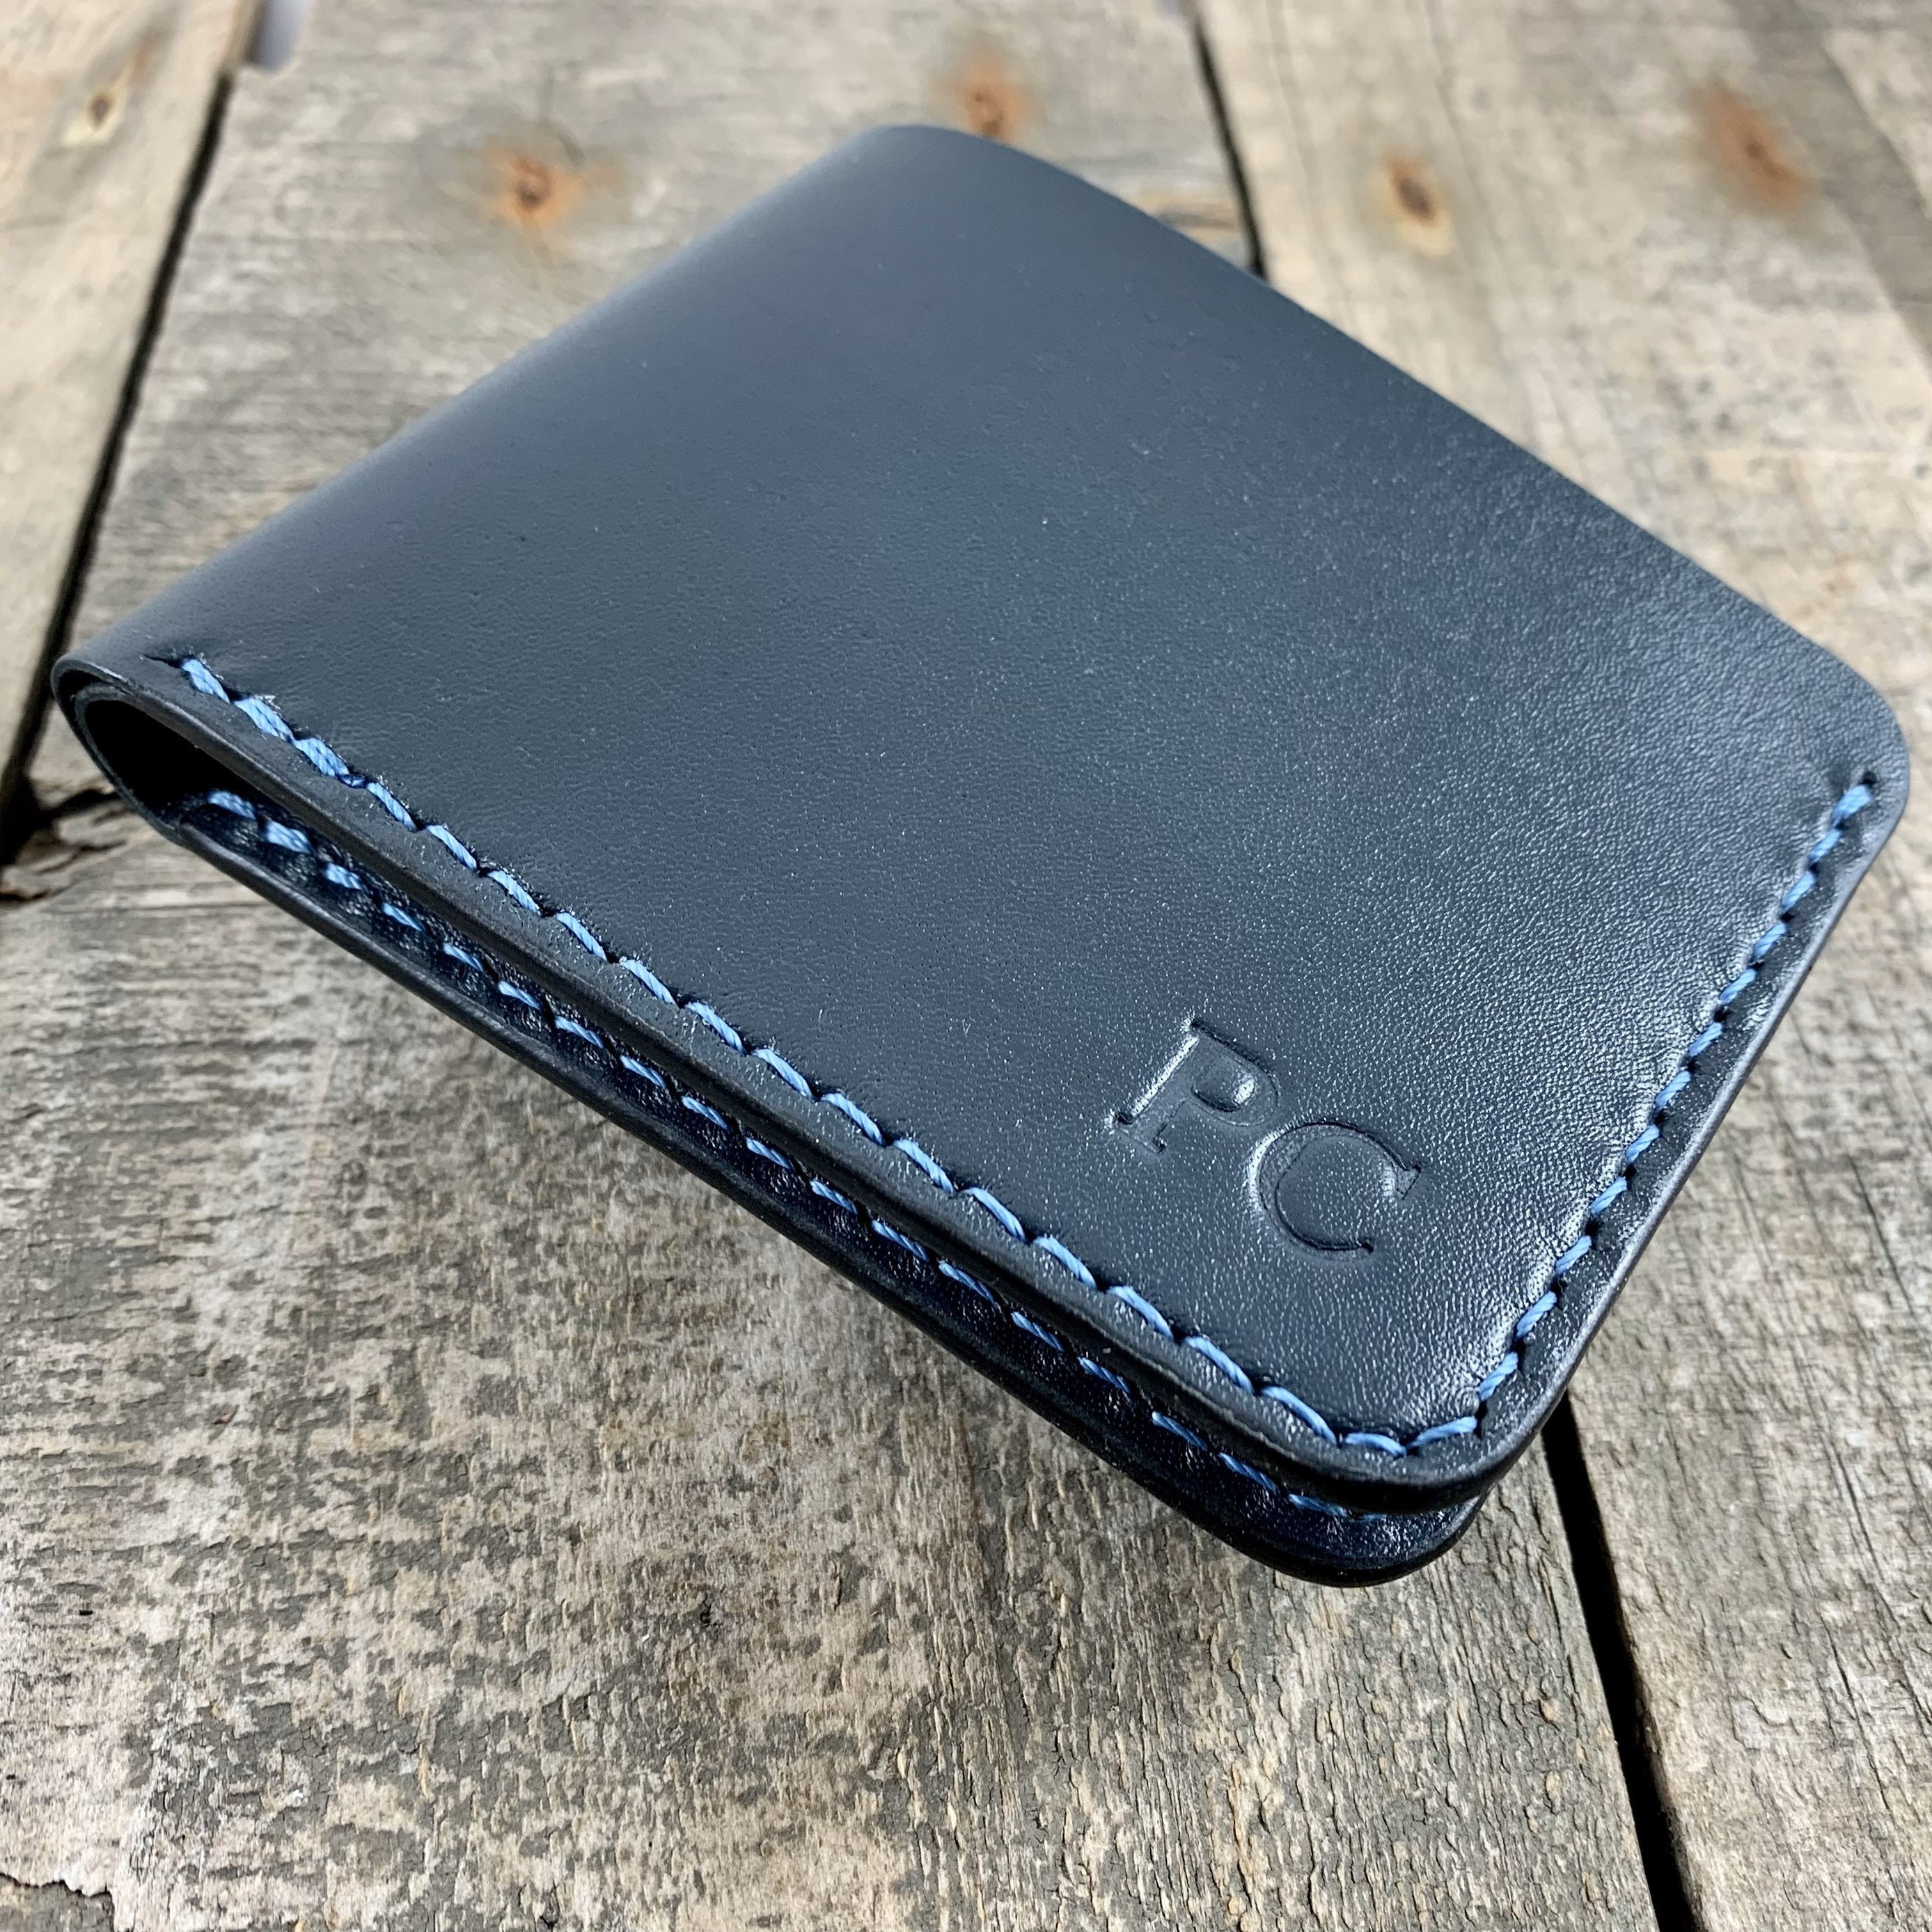 Bifold leather wallet. 6 card slots + 2 pockets + cash slot. : r